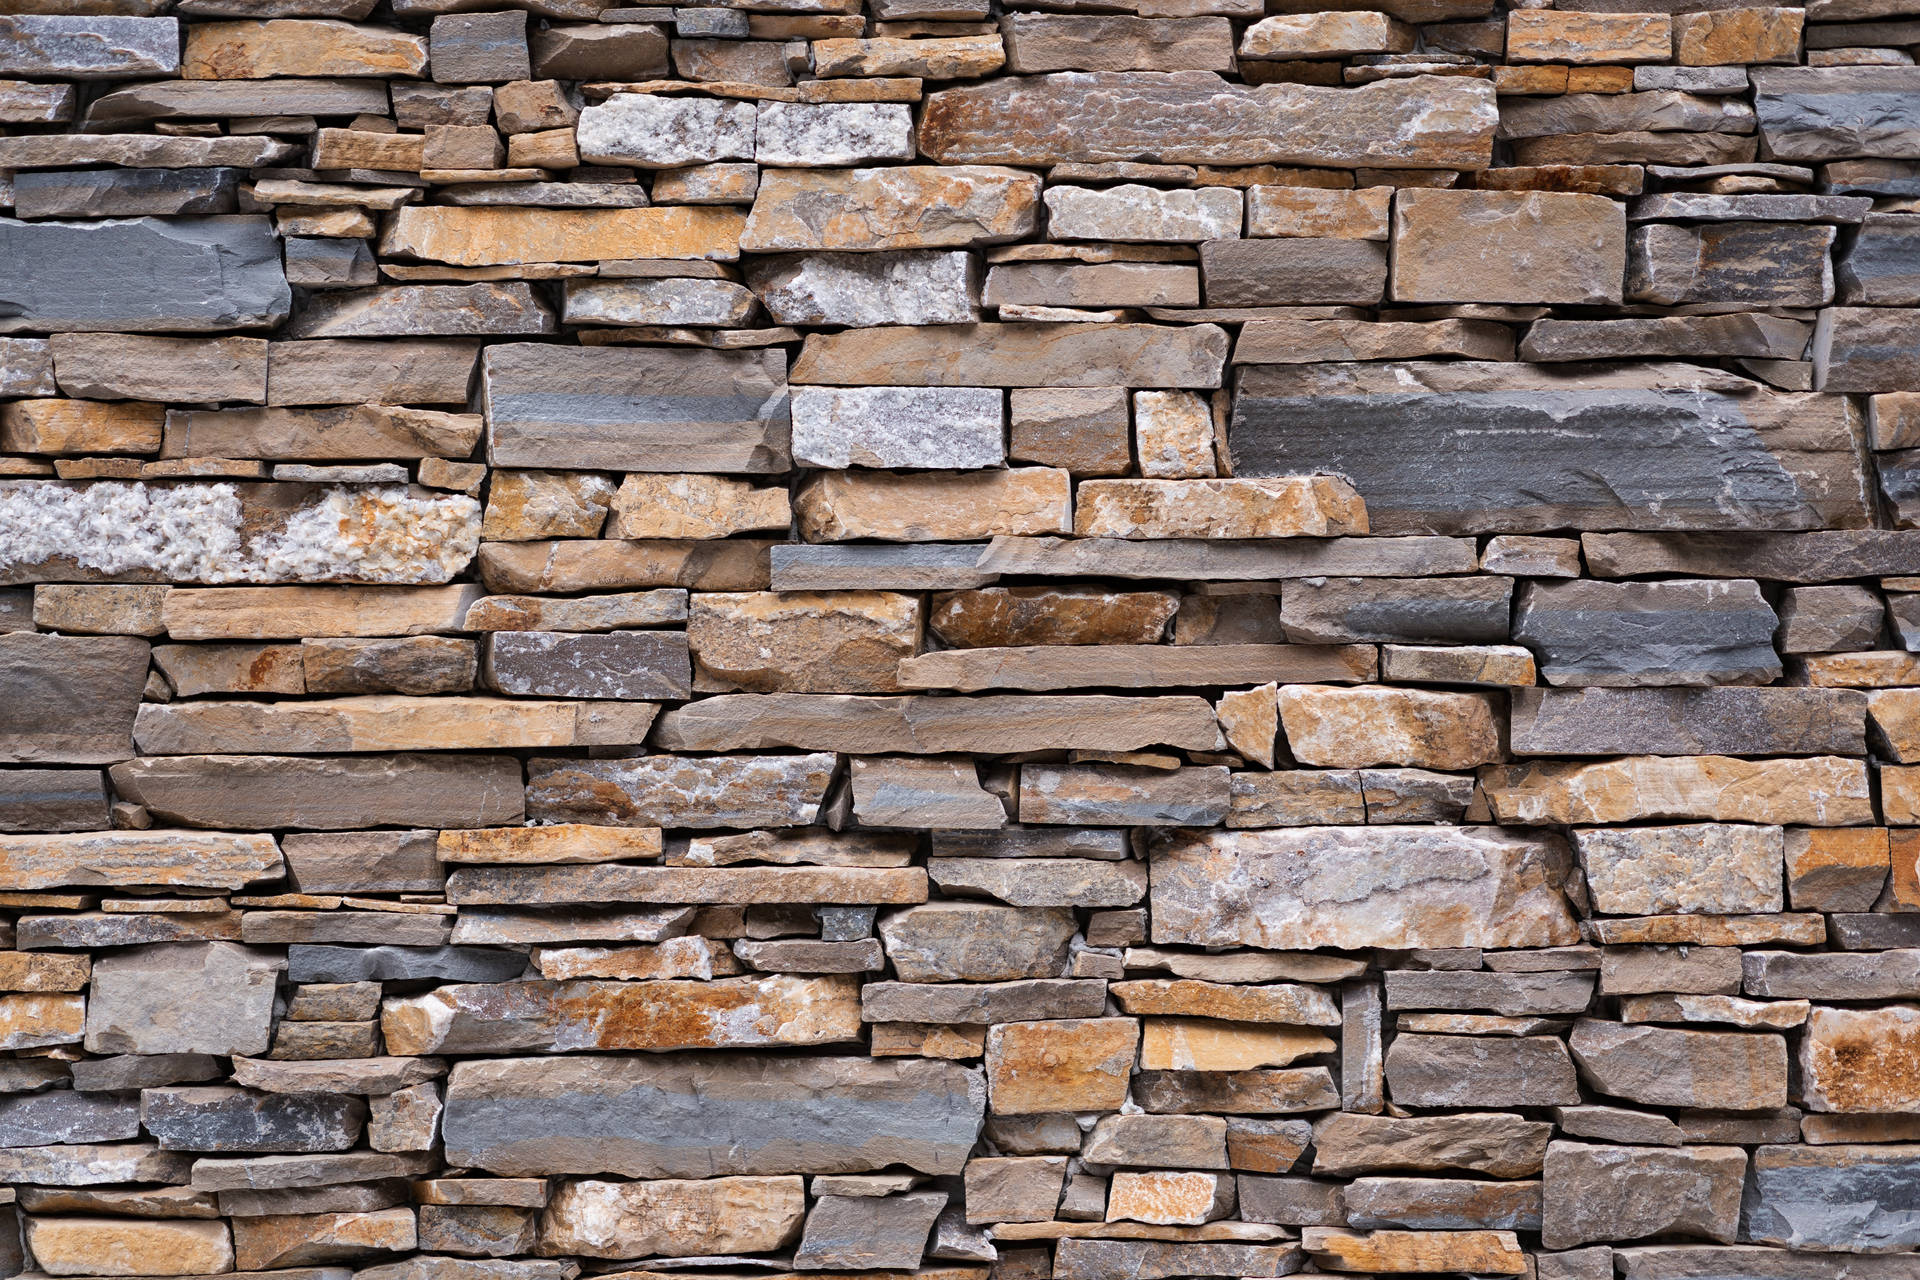 Caption: Captivating Hi-res Texture Of A Stone Wall